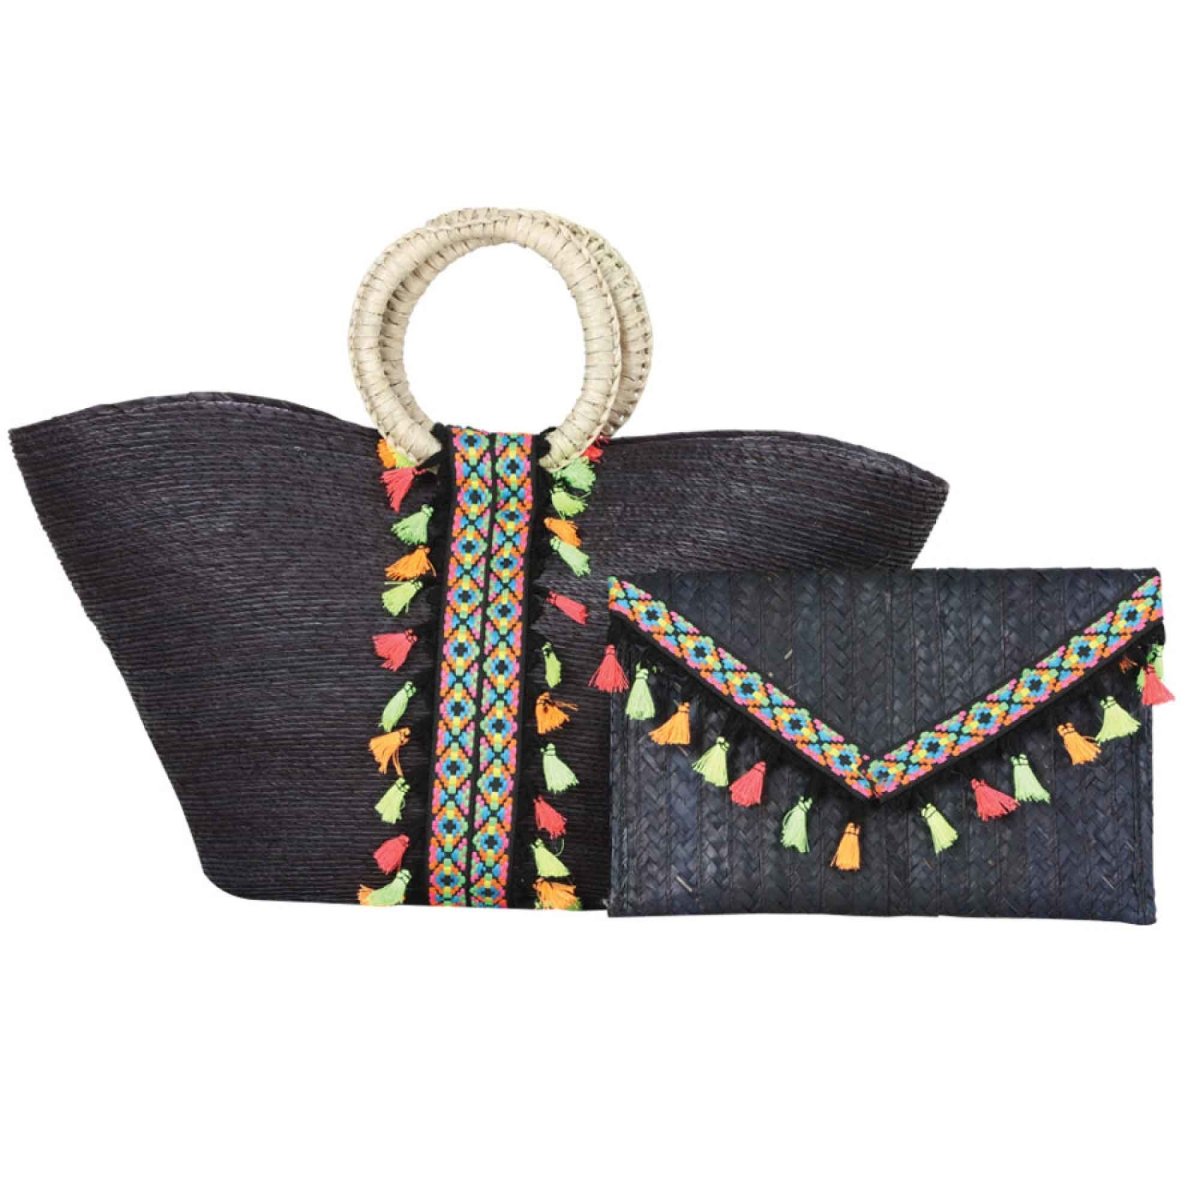 Handmade Artesanal handbag (2 piece set) - CharroAzteca.com